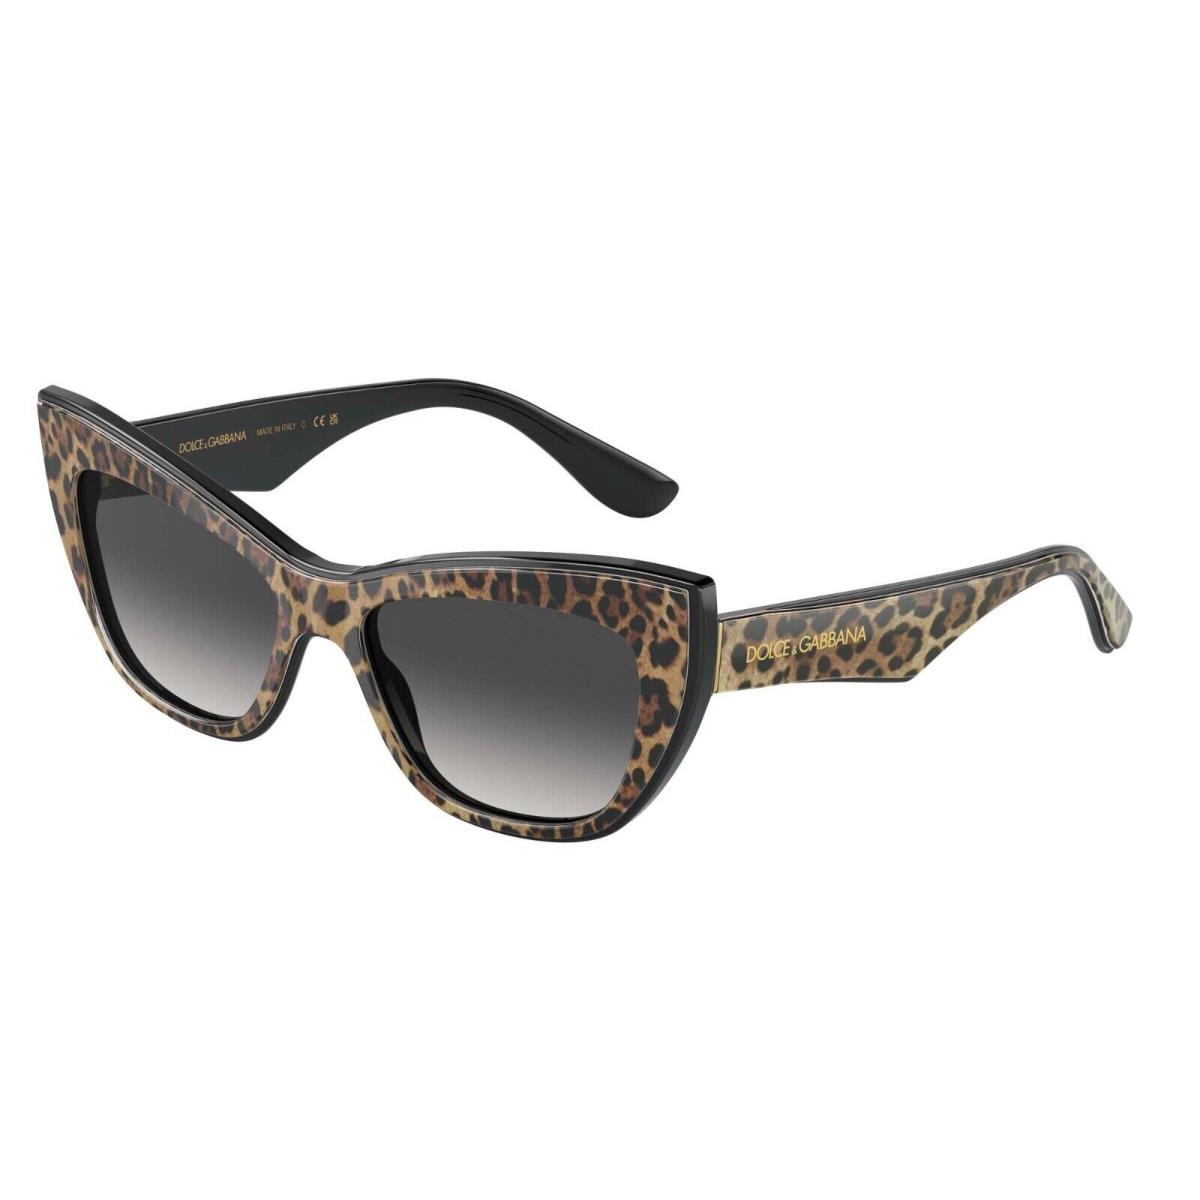 Dolce Gabbana DG 4417 Leo Brown Black/grey Shaded 3163/8G Sunglasses